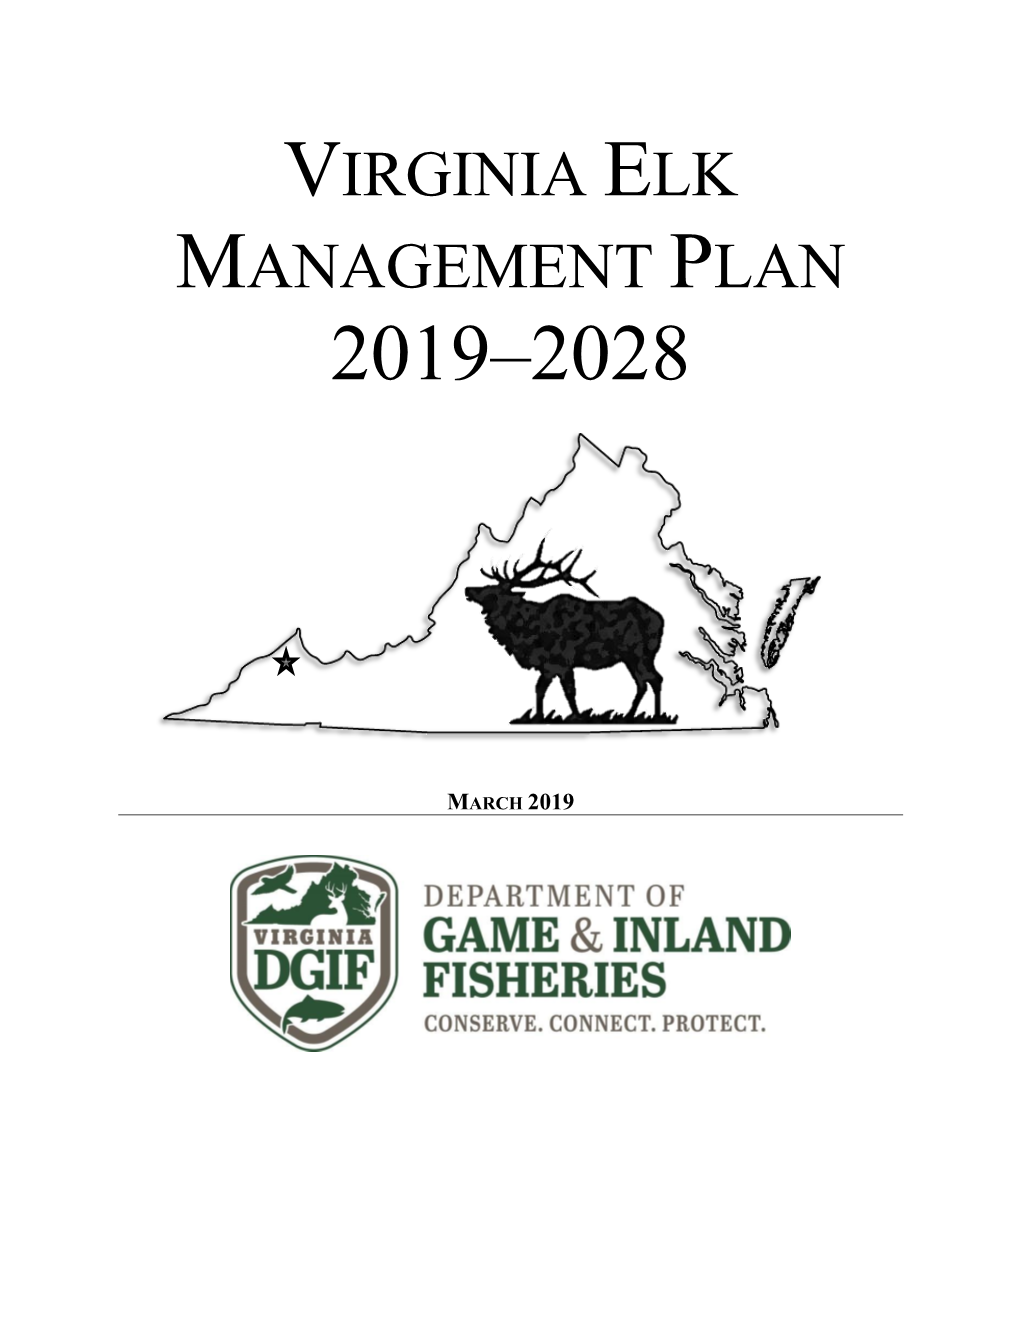 Read the Virginia Elk Management Plan